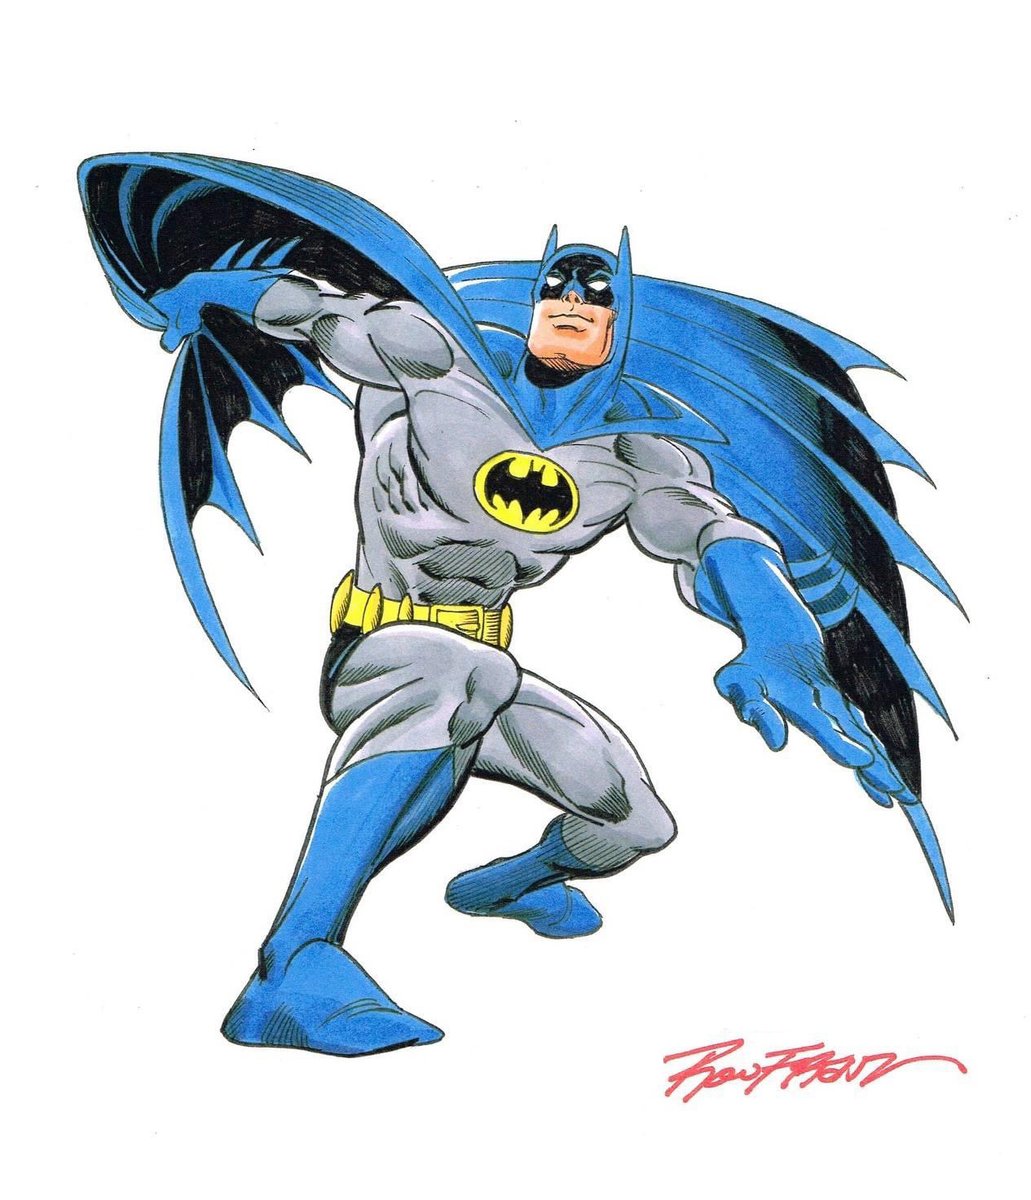 Classic Batman Art by Ron Frenz